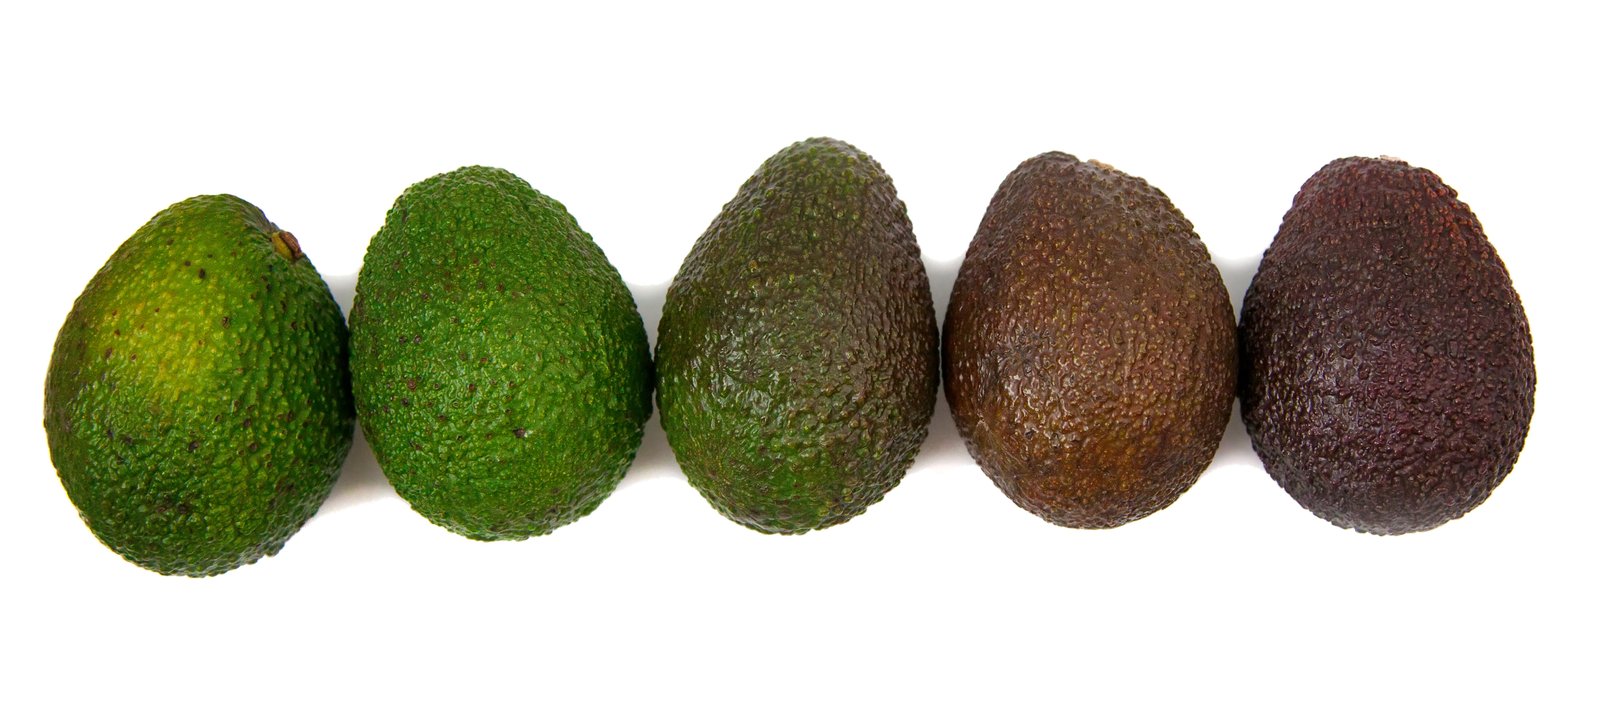 ripening avocados